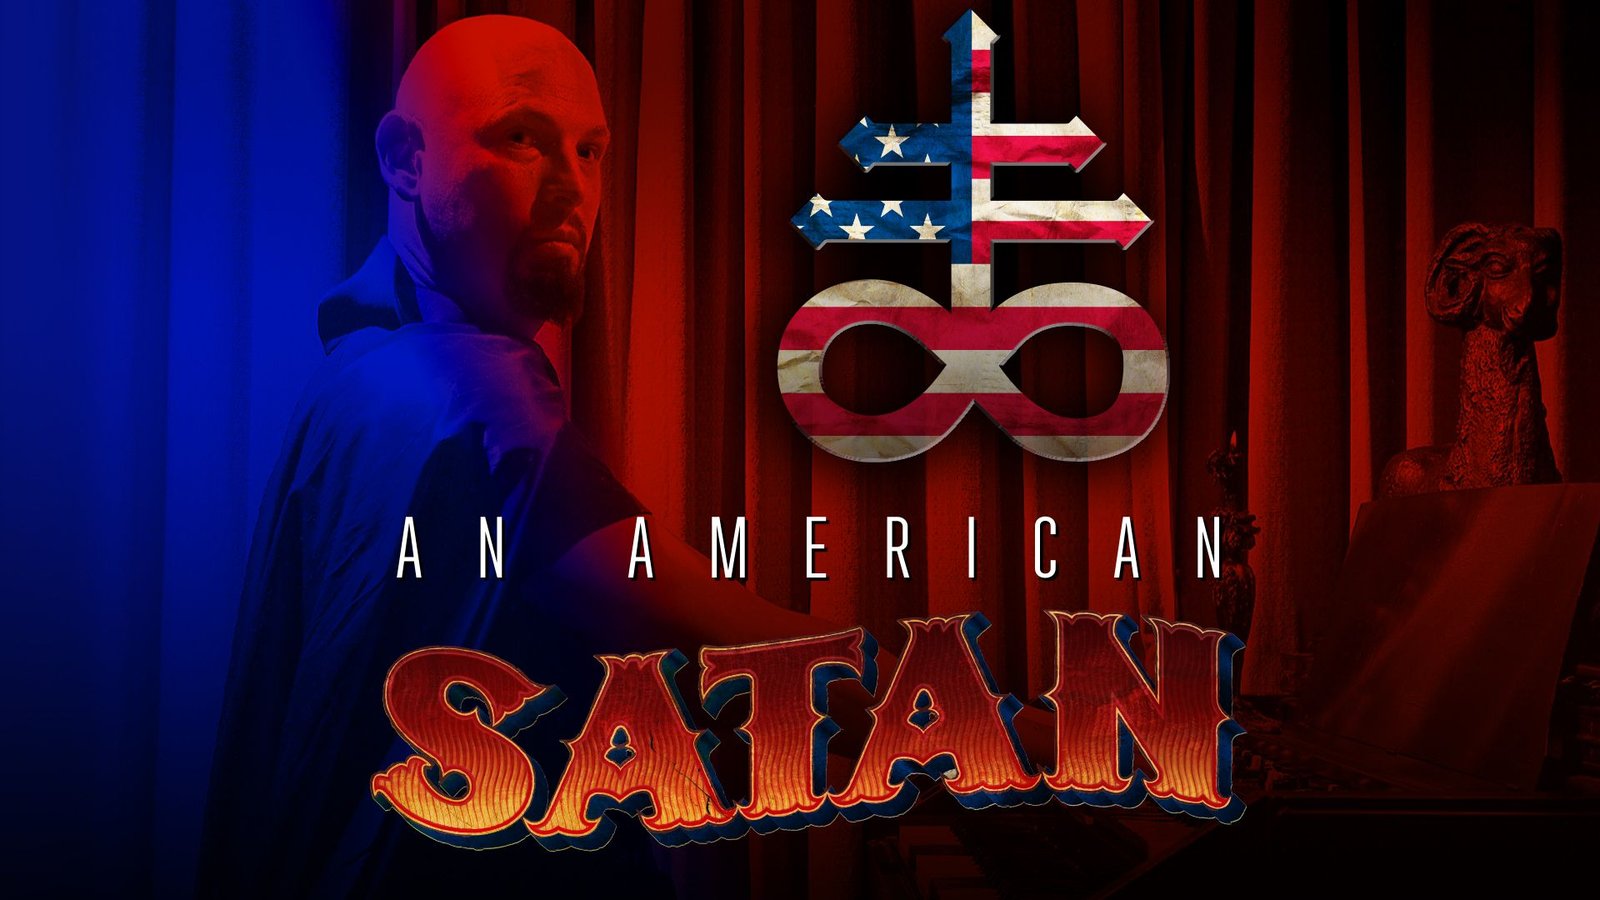 An American Satan